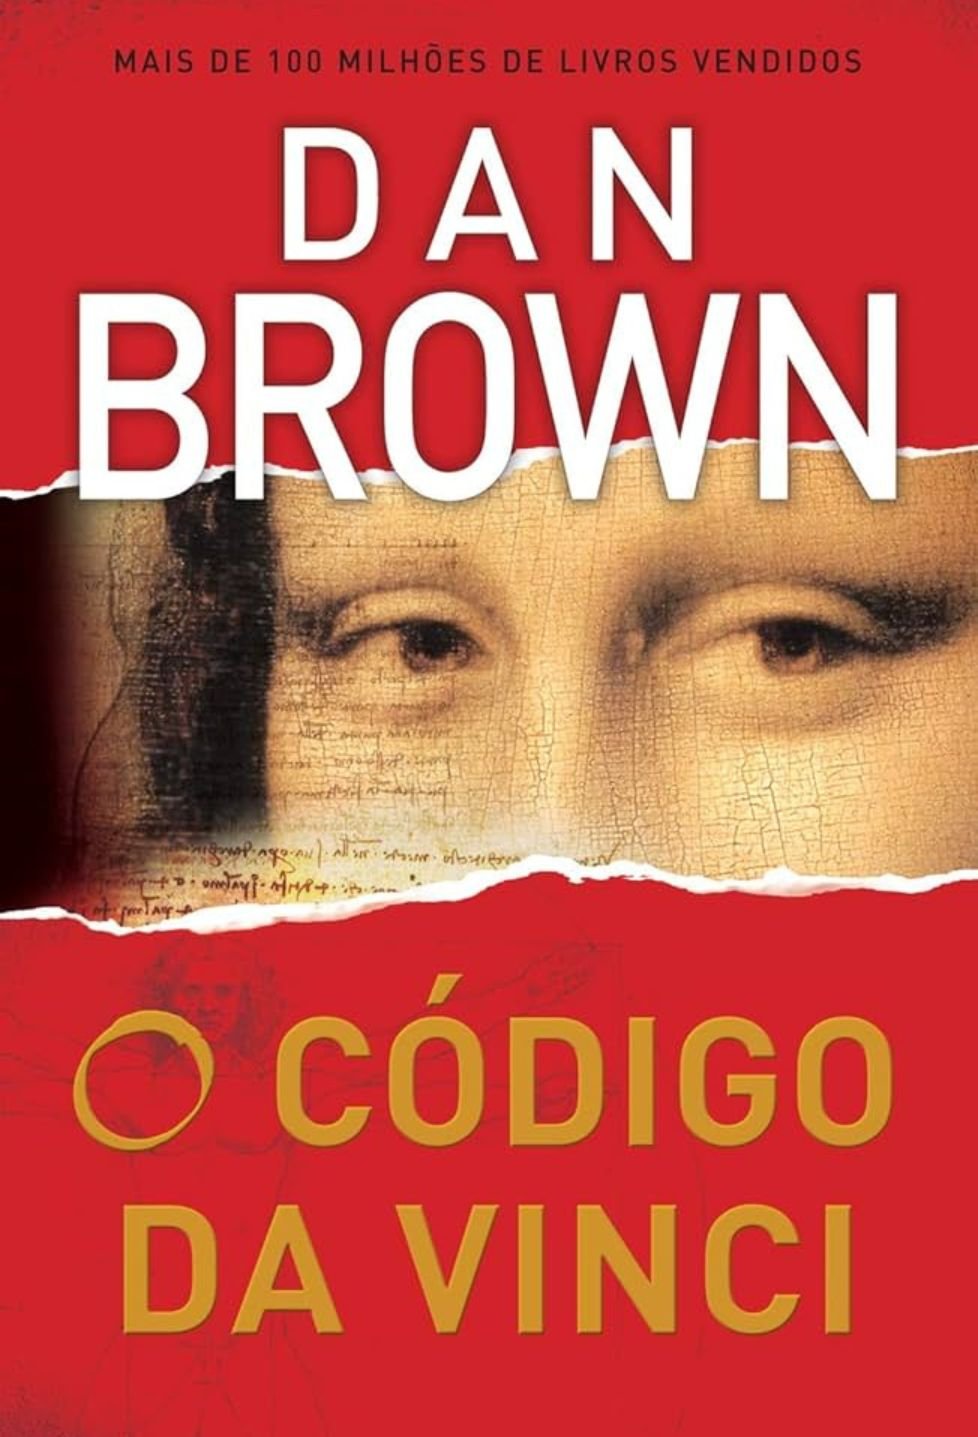 O-Codigo-da-Vinci-dan-brown